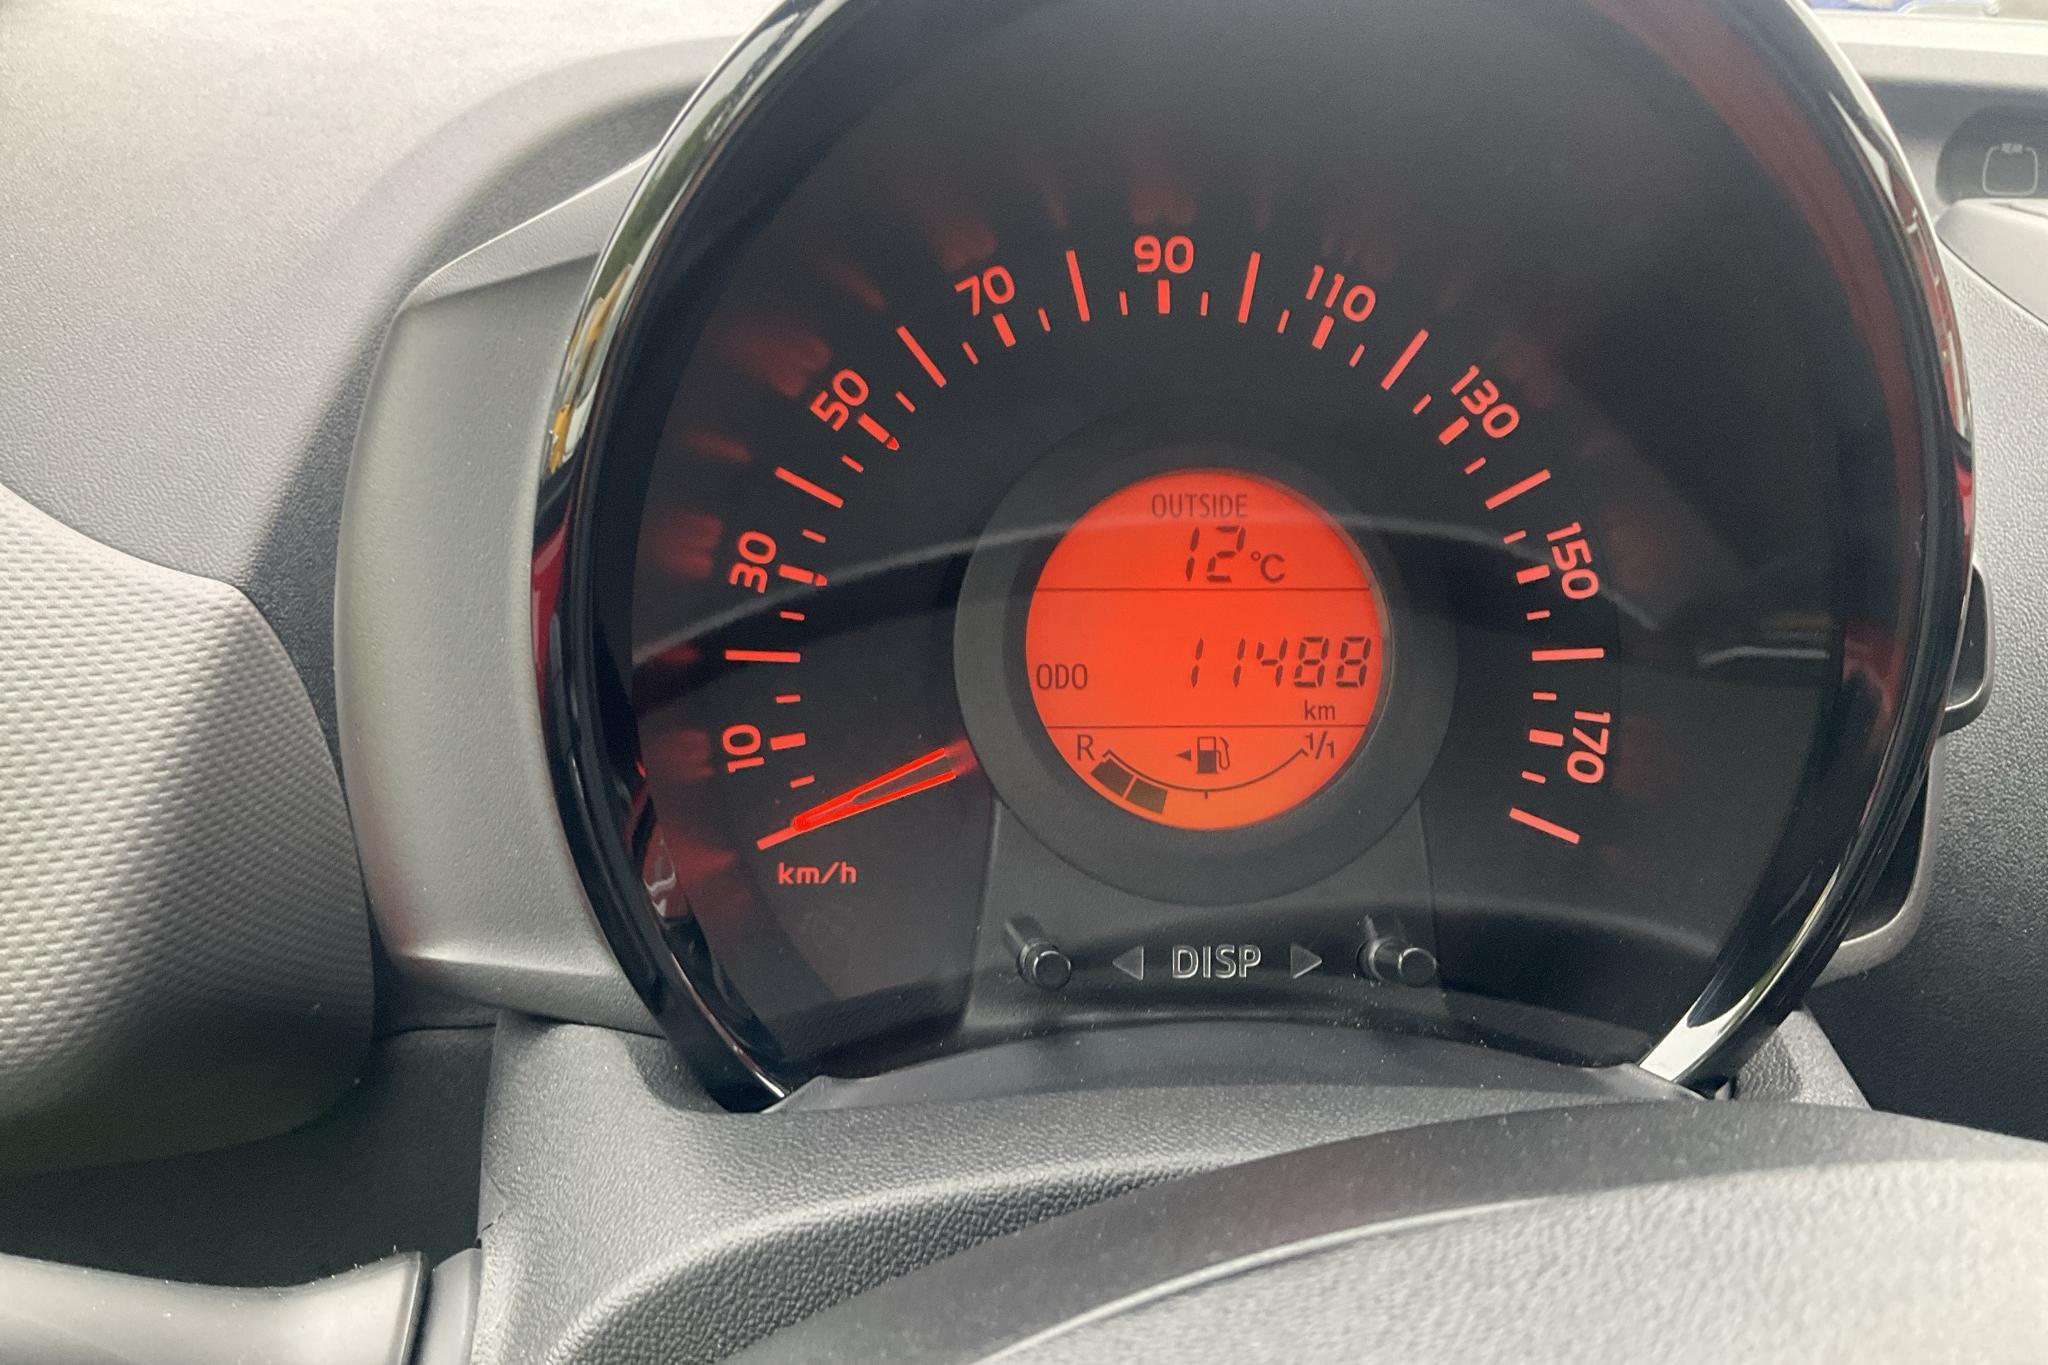 Peugeot 108 PureTech 5dr (72hk) - 11 490 km - Manual - red - 2020